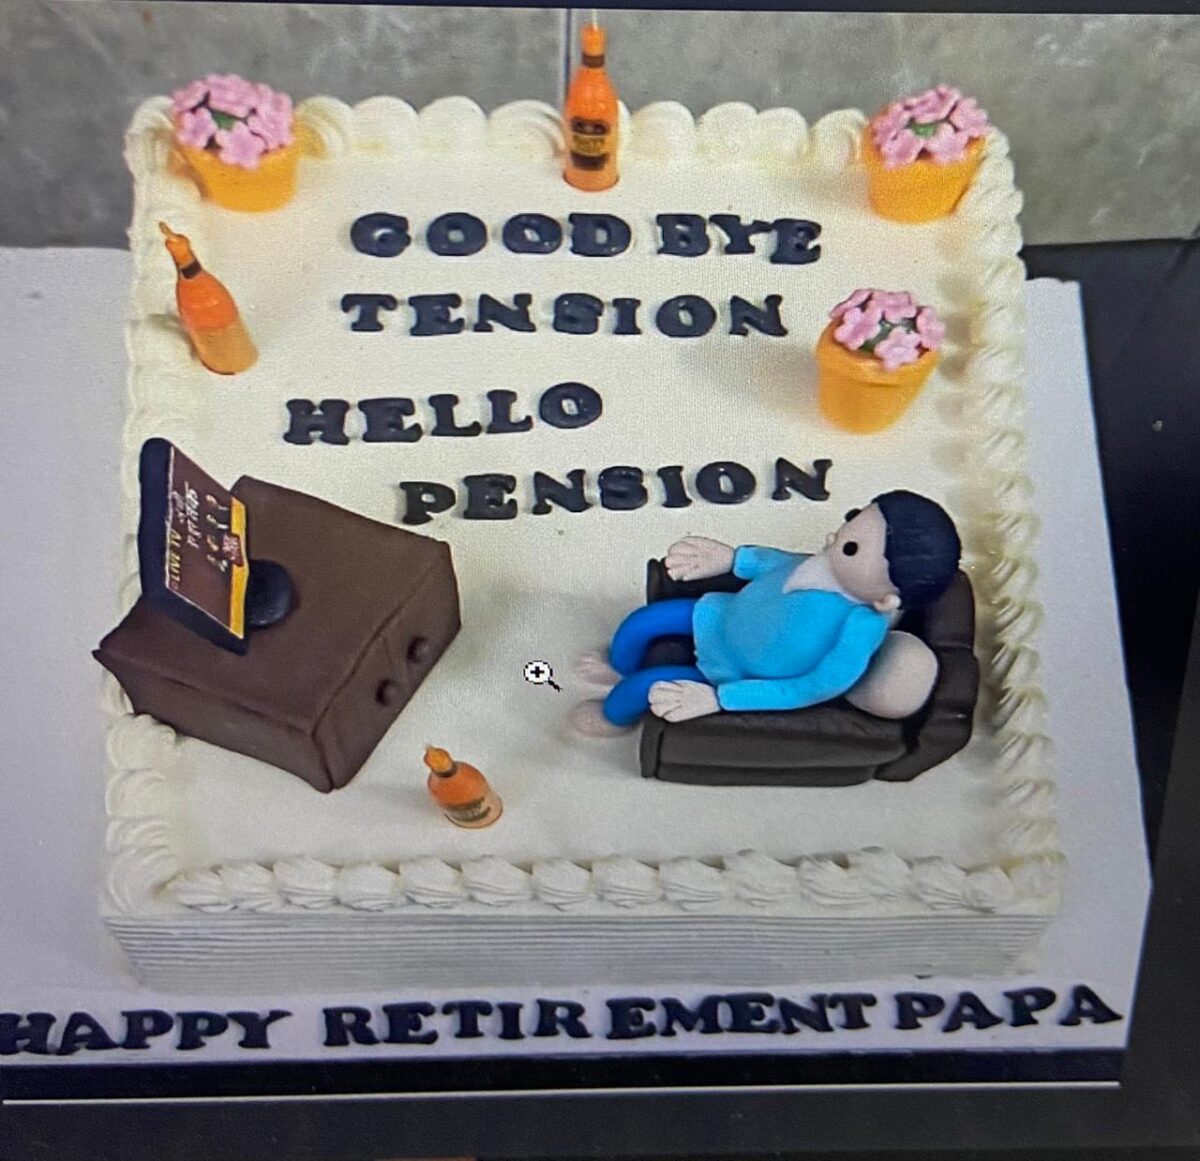 Retirement cake for papa